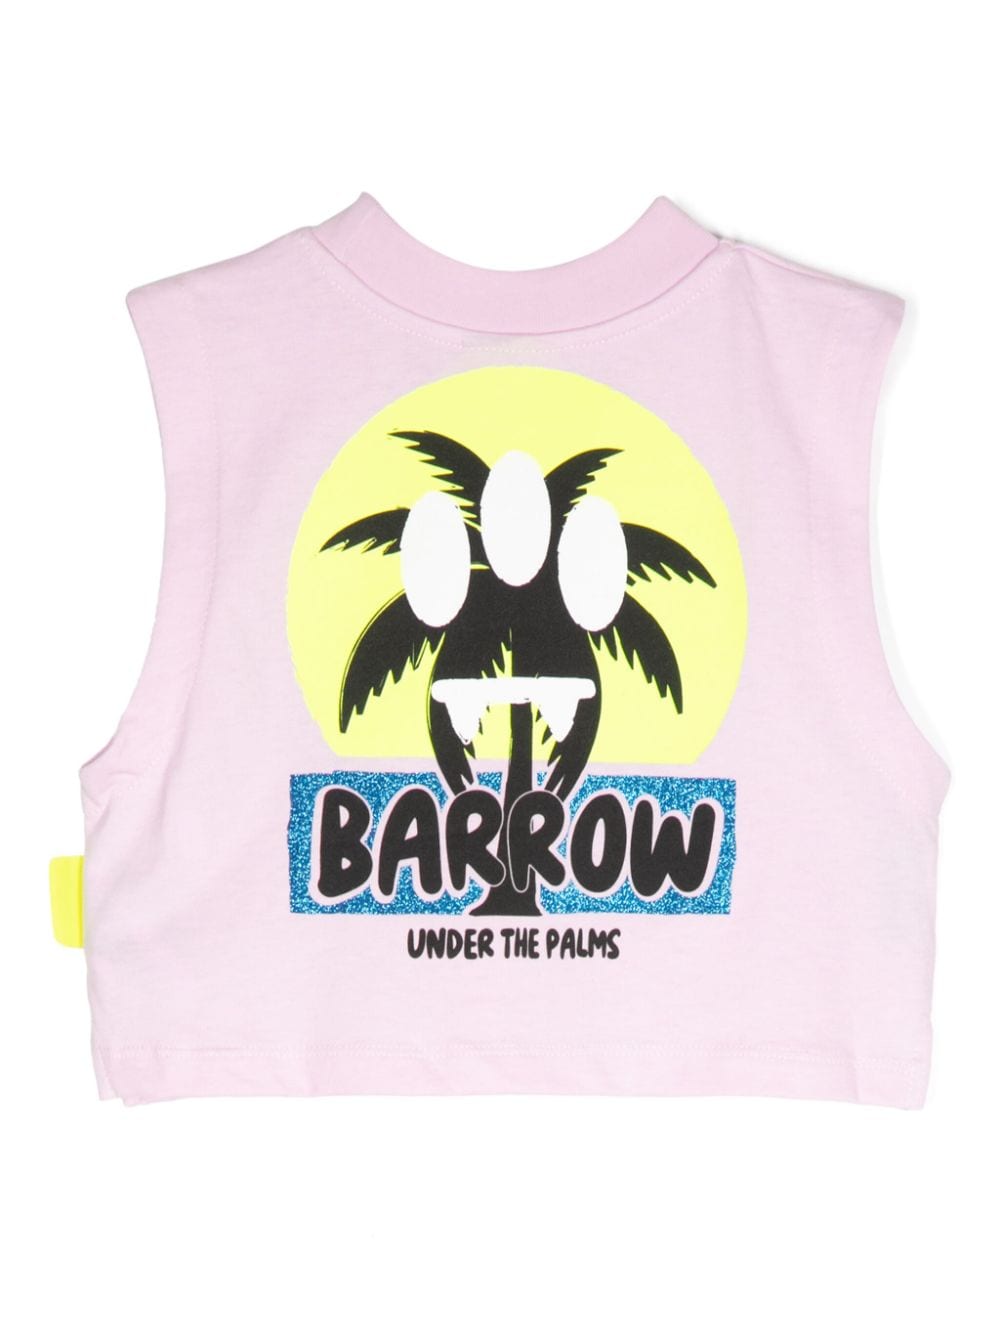 Barrow kids logo-print cotton T-shirt - Roze